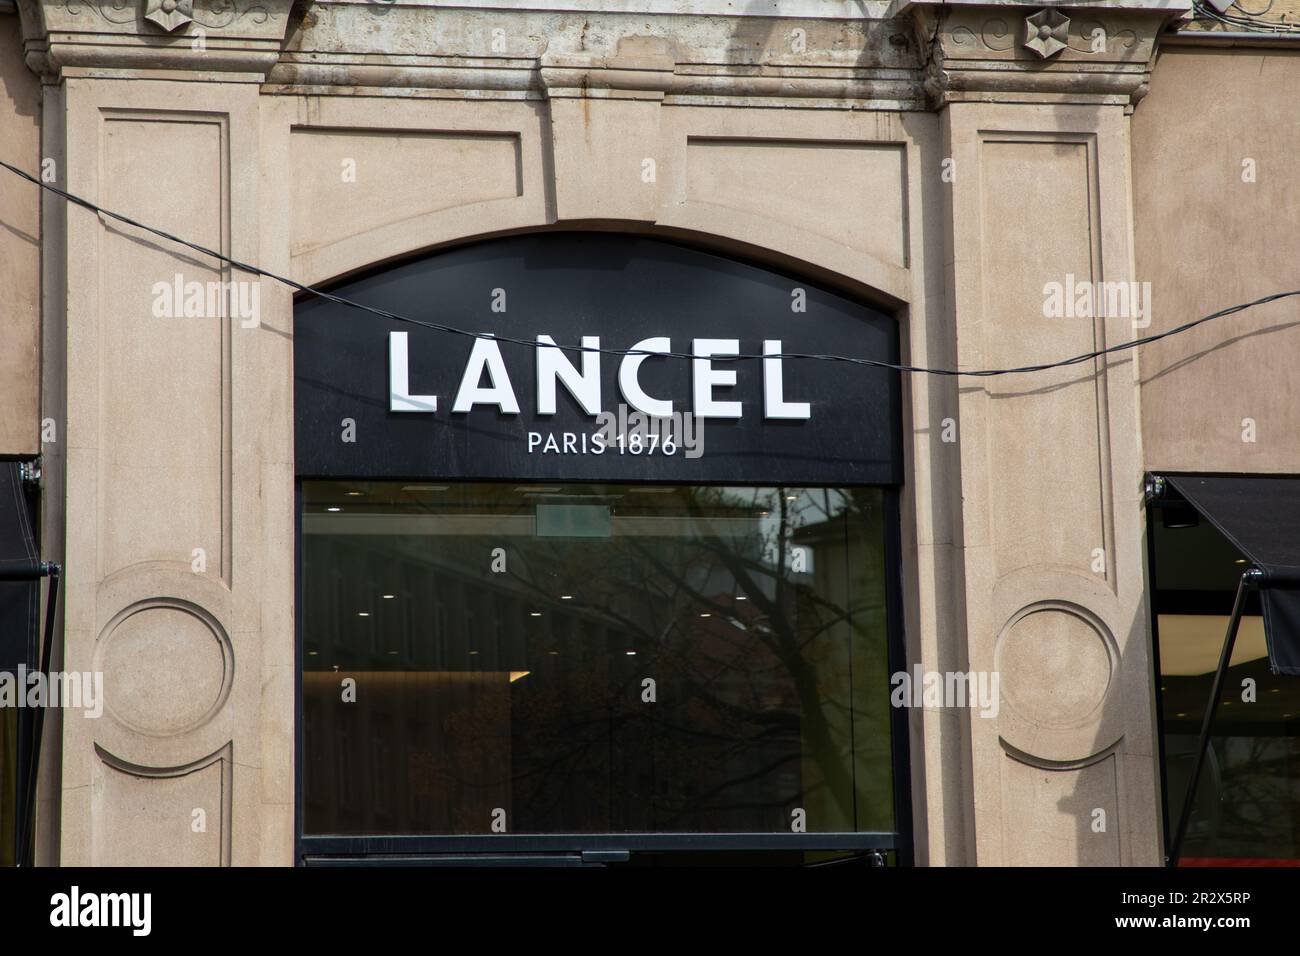 Bordeaux , Aquitaine  France - 05 19 2023 : lancel paris logo and sign text front boutique facade store fashion brand clothes shop in street view Stock Photo